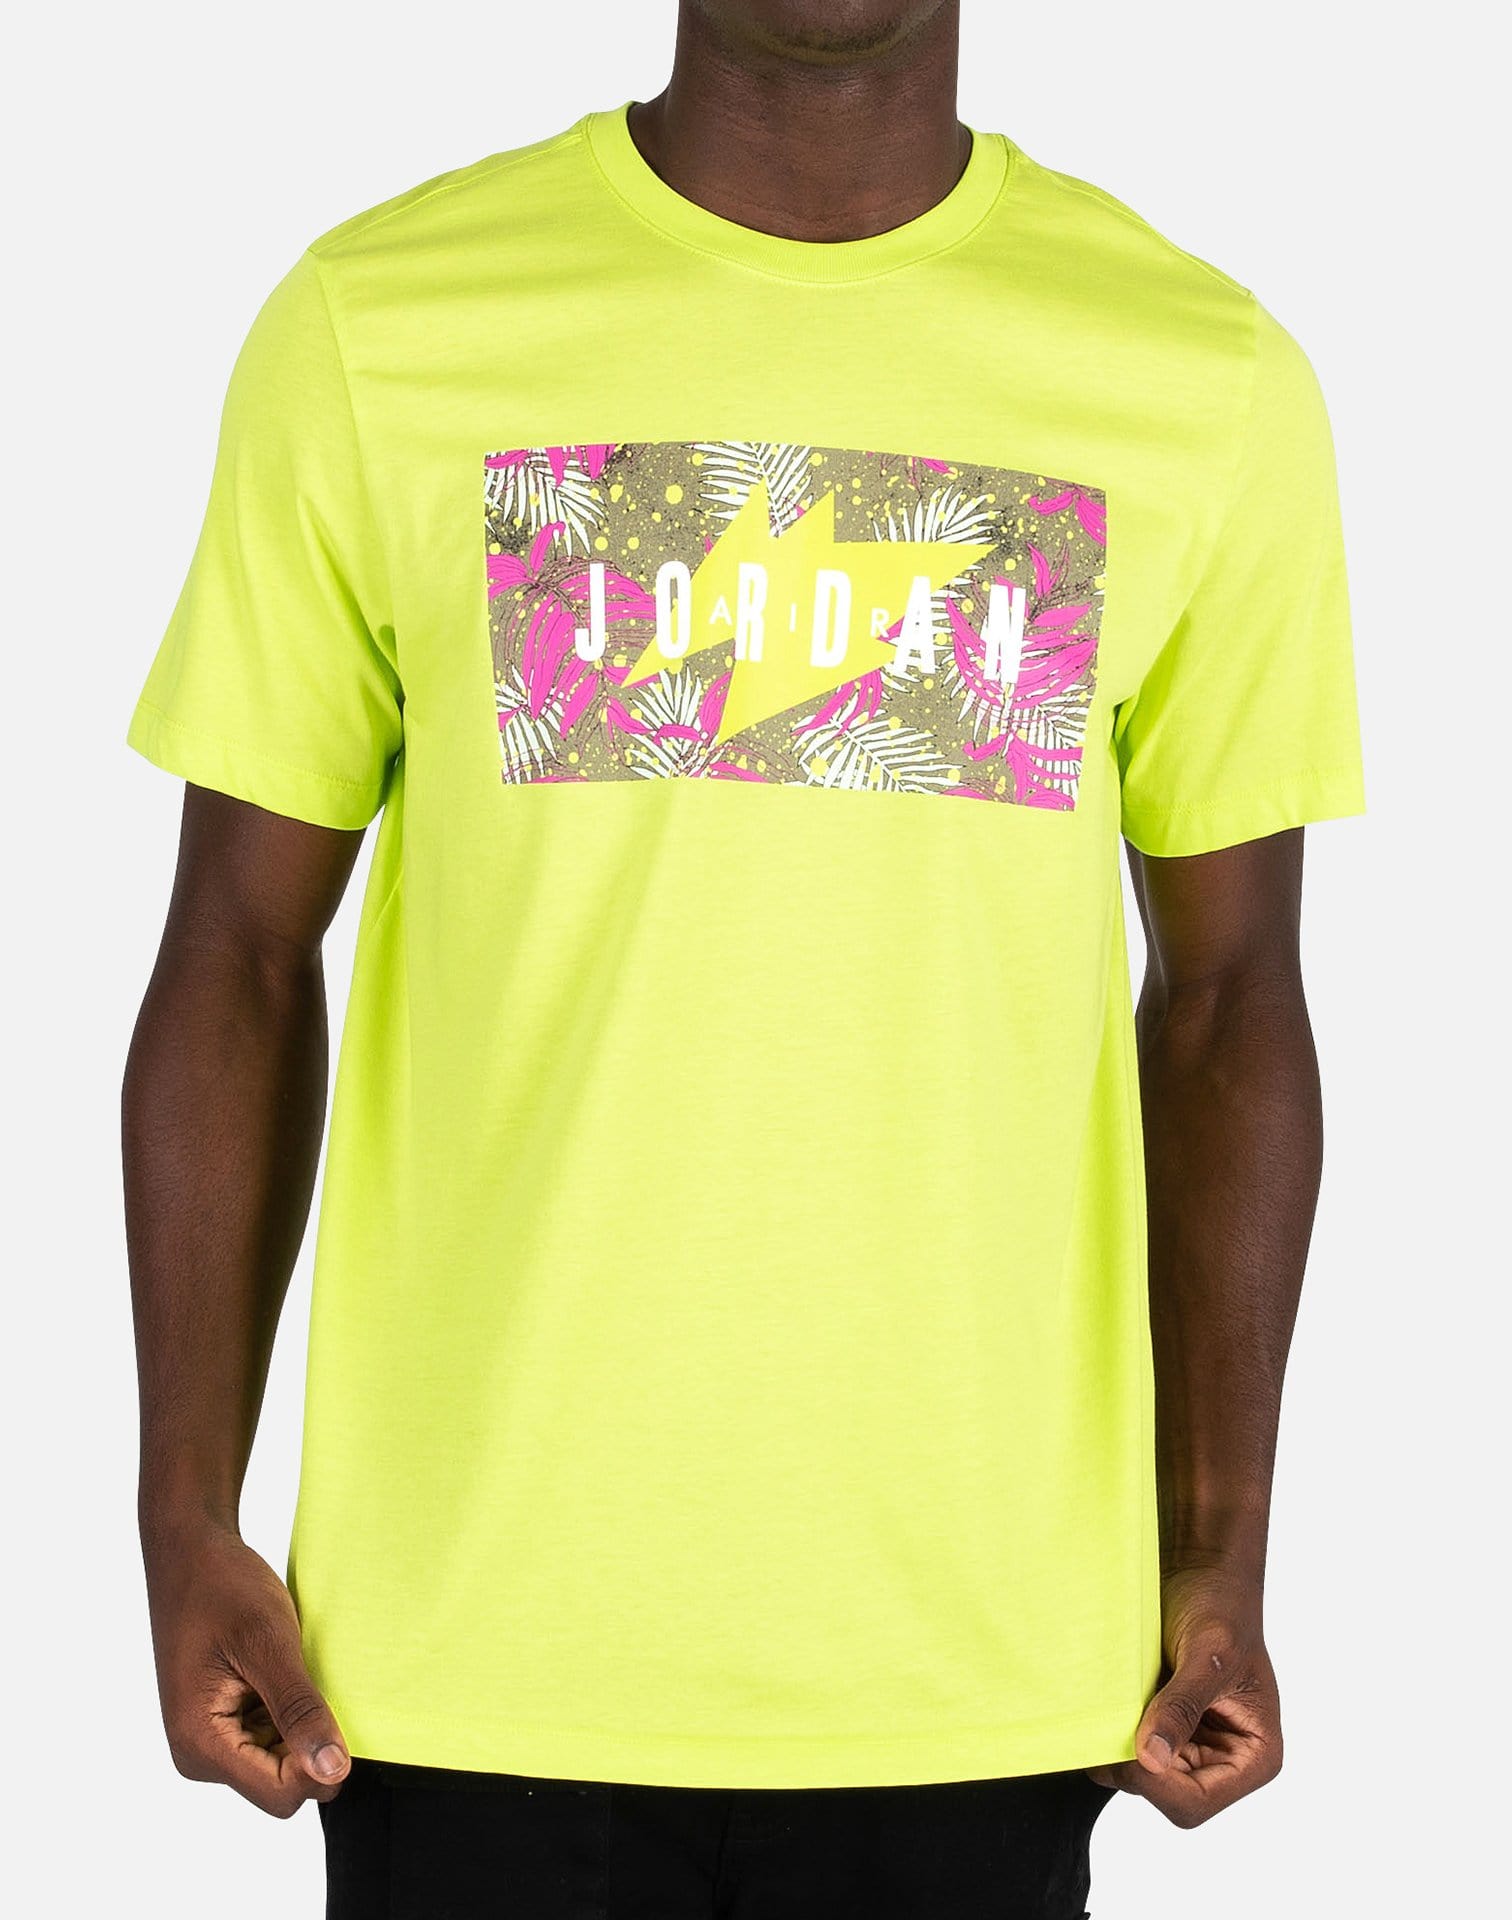 Jordan Poolside Floral T-Shirt, Buy Base Layers Sportswear Online